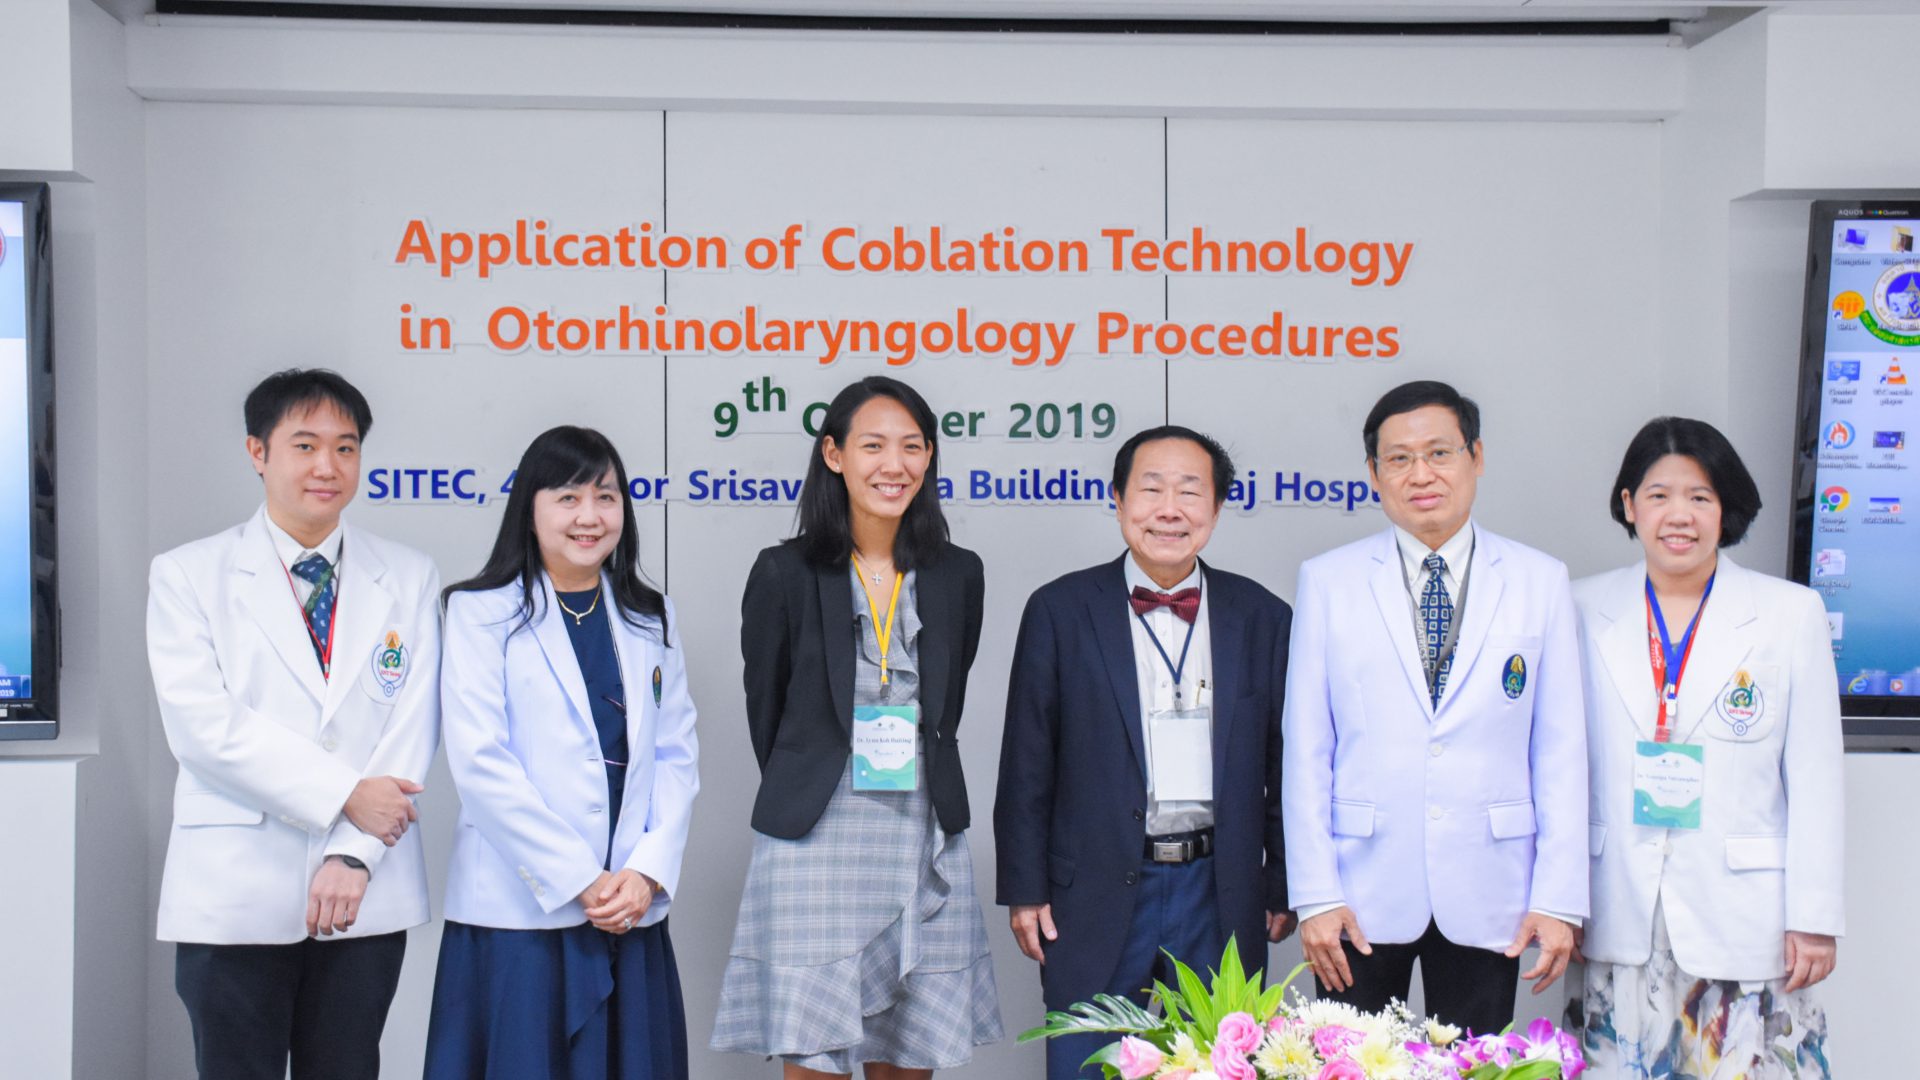 “Application of Coblation Technology in Otorhinolaryngologic Procedures”